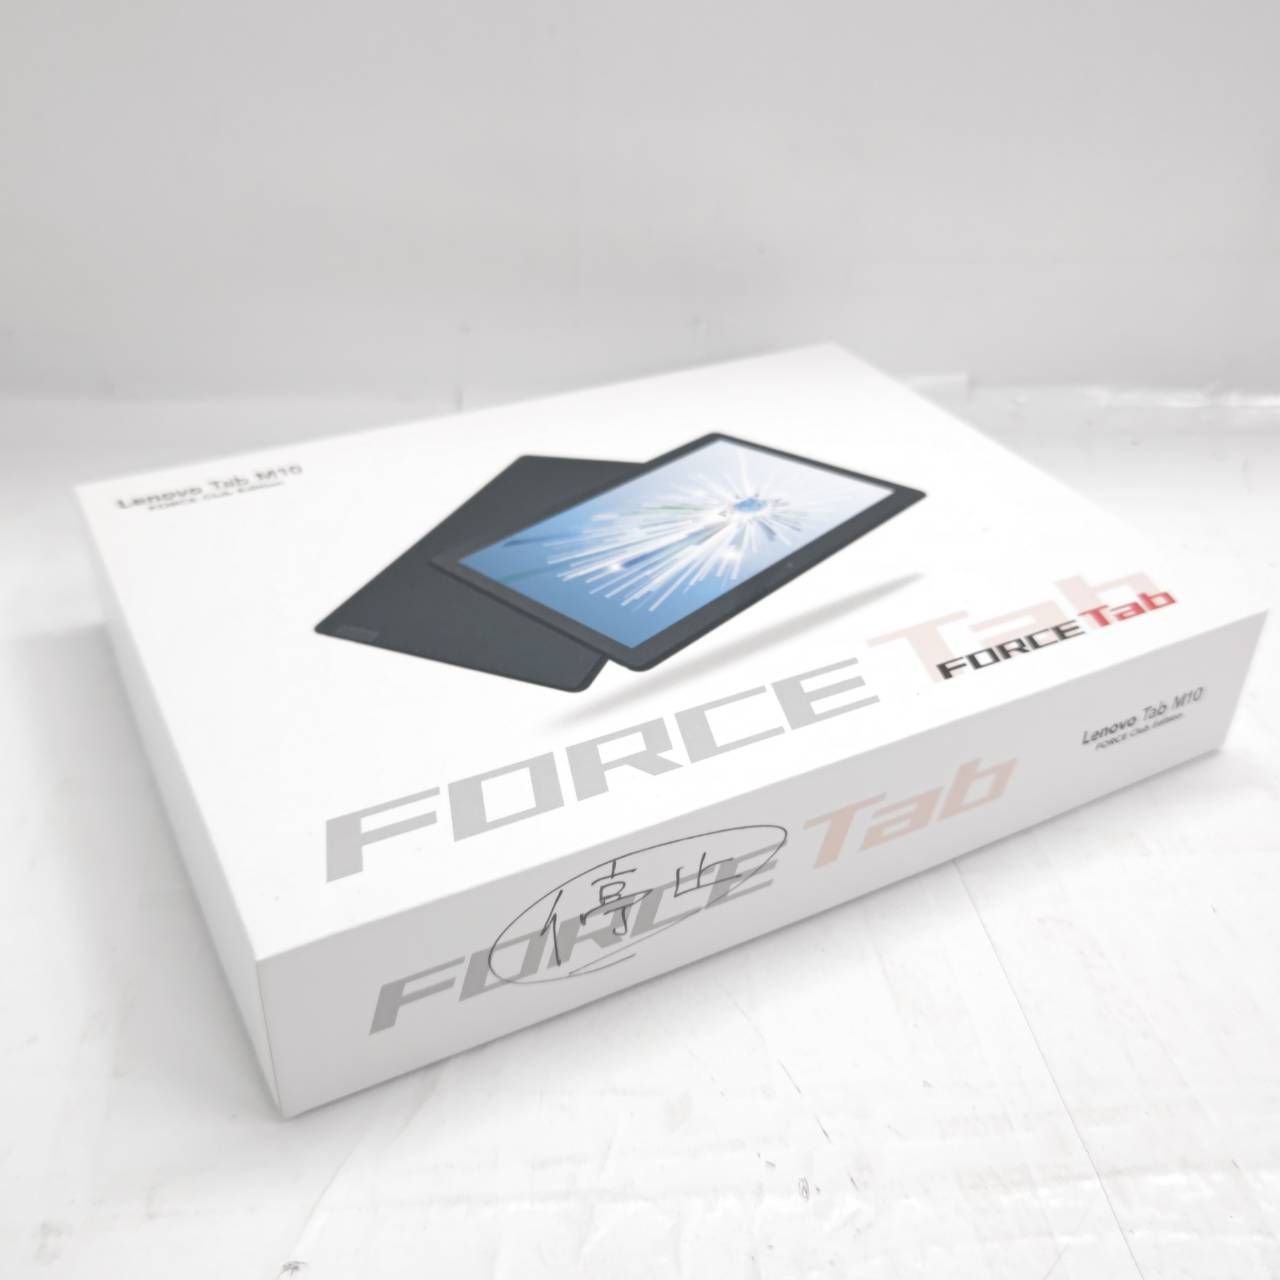 h59811 タブレット Lenovo Tab M10　FORCE Club Edition 2GB/16GB 美品良品未使用